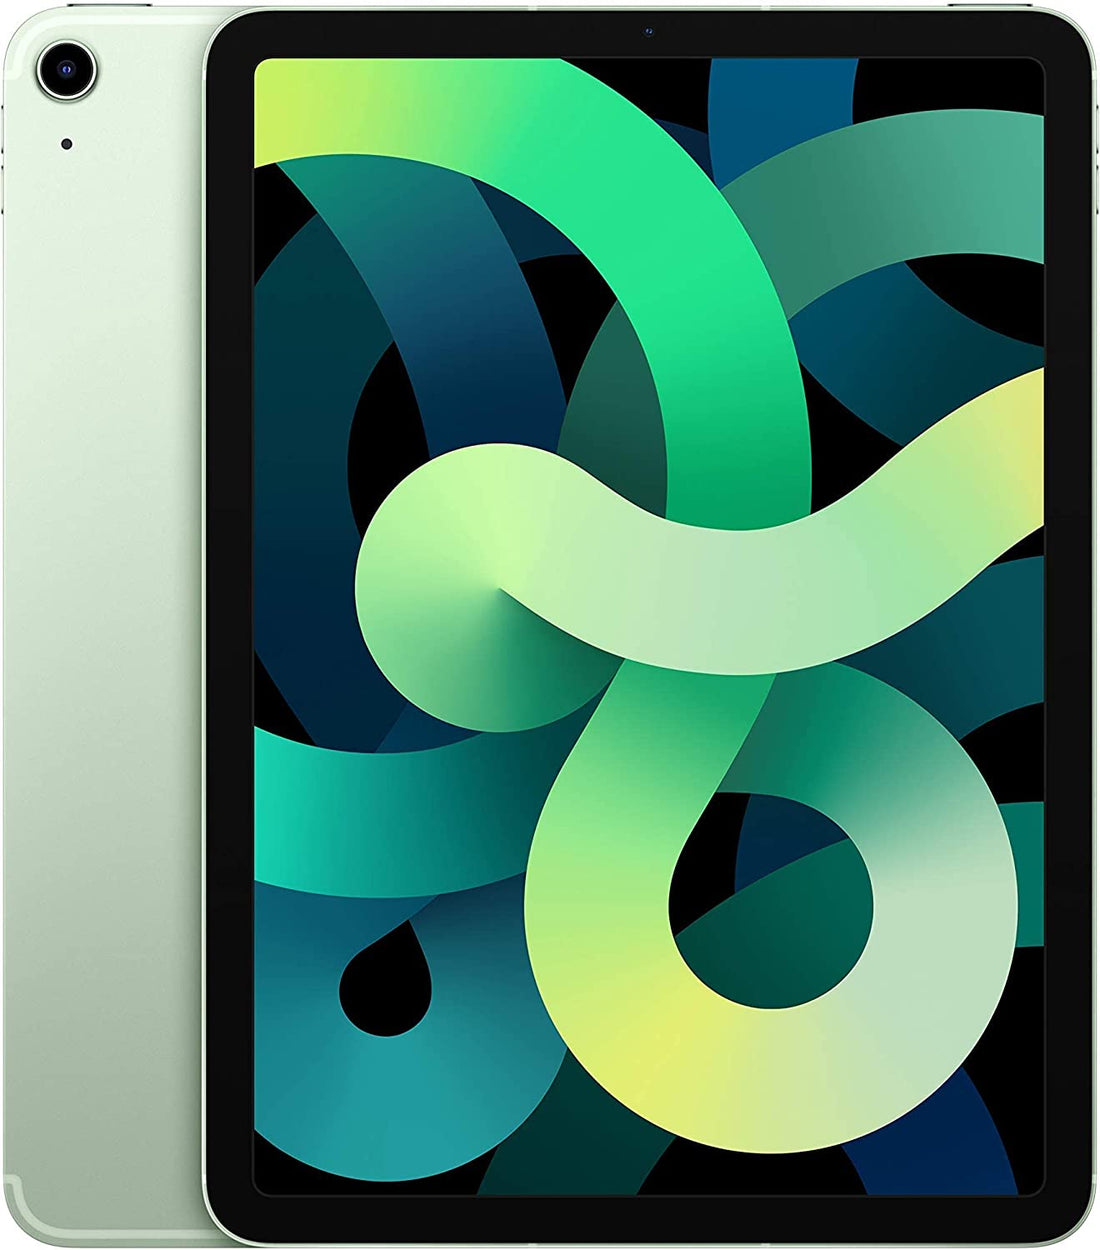 Apple iPad Air 4th Gen 64GB Wifi + Cellular (Unlocked) - Green (Refurbished)